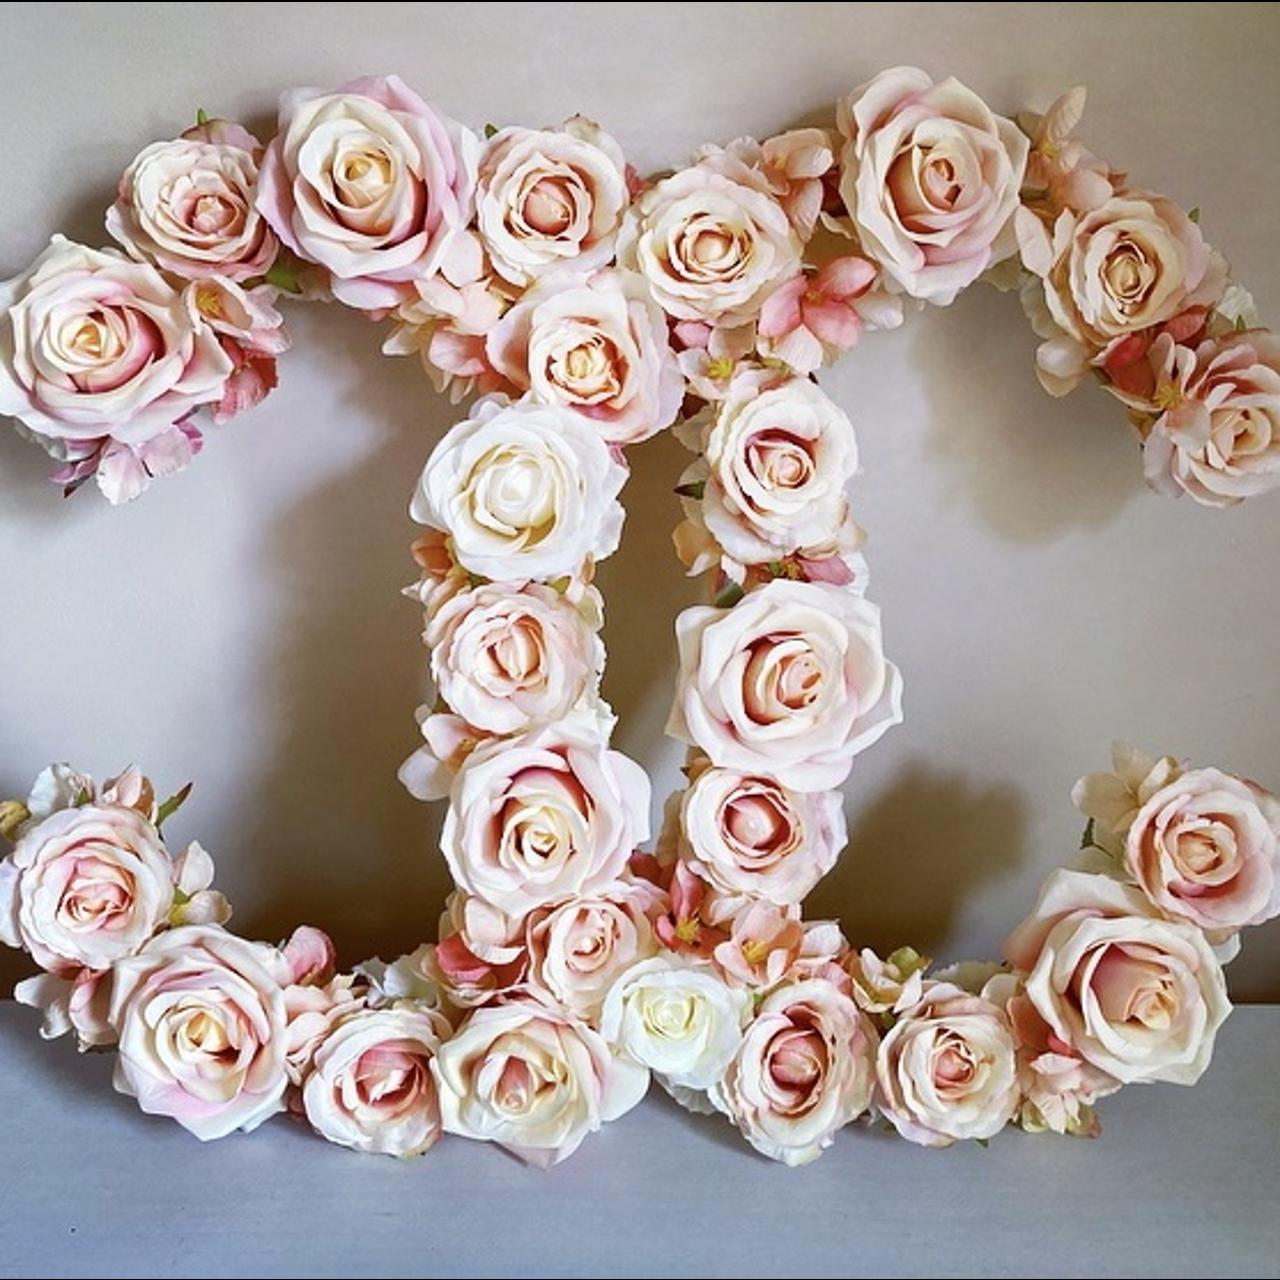 50cm tall Chanel logo home decor floral wreath - Depop